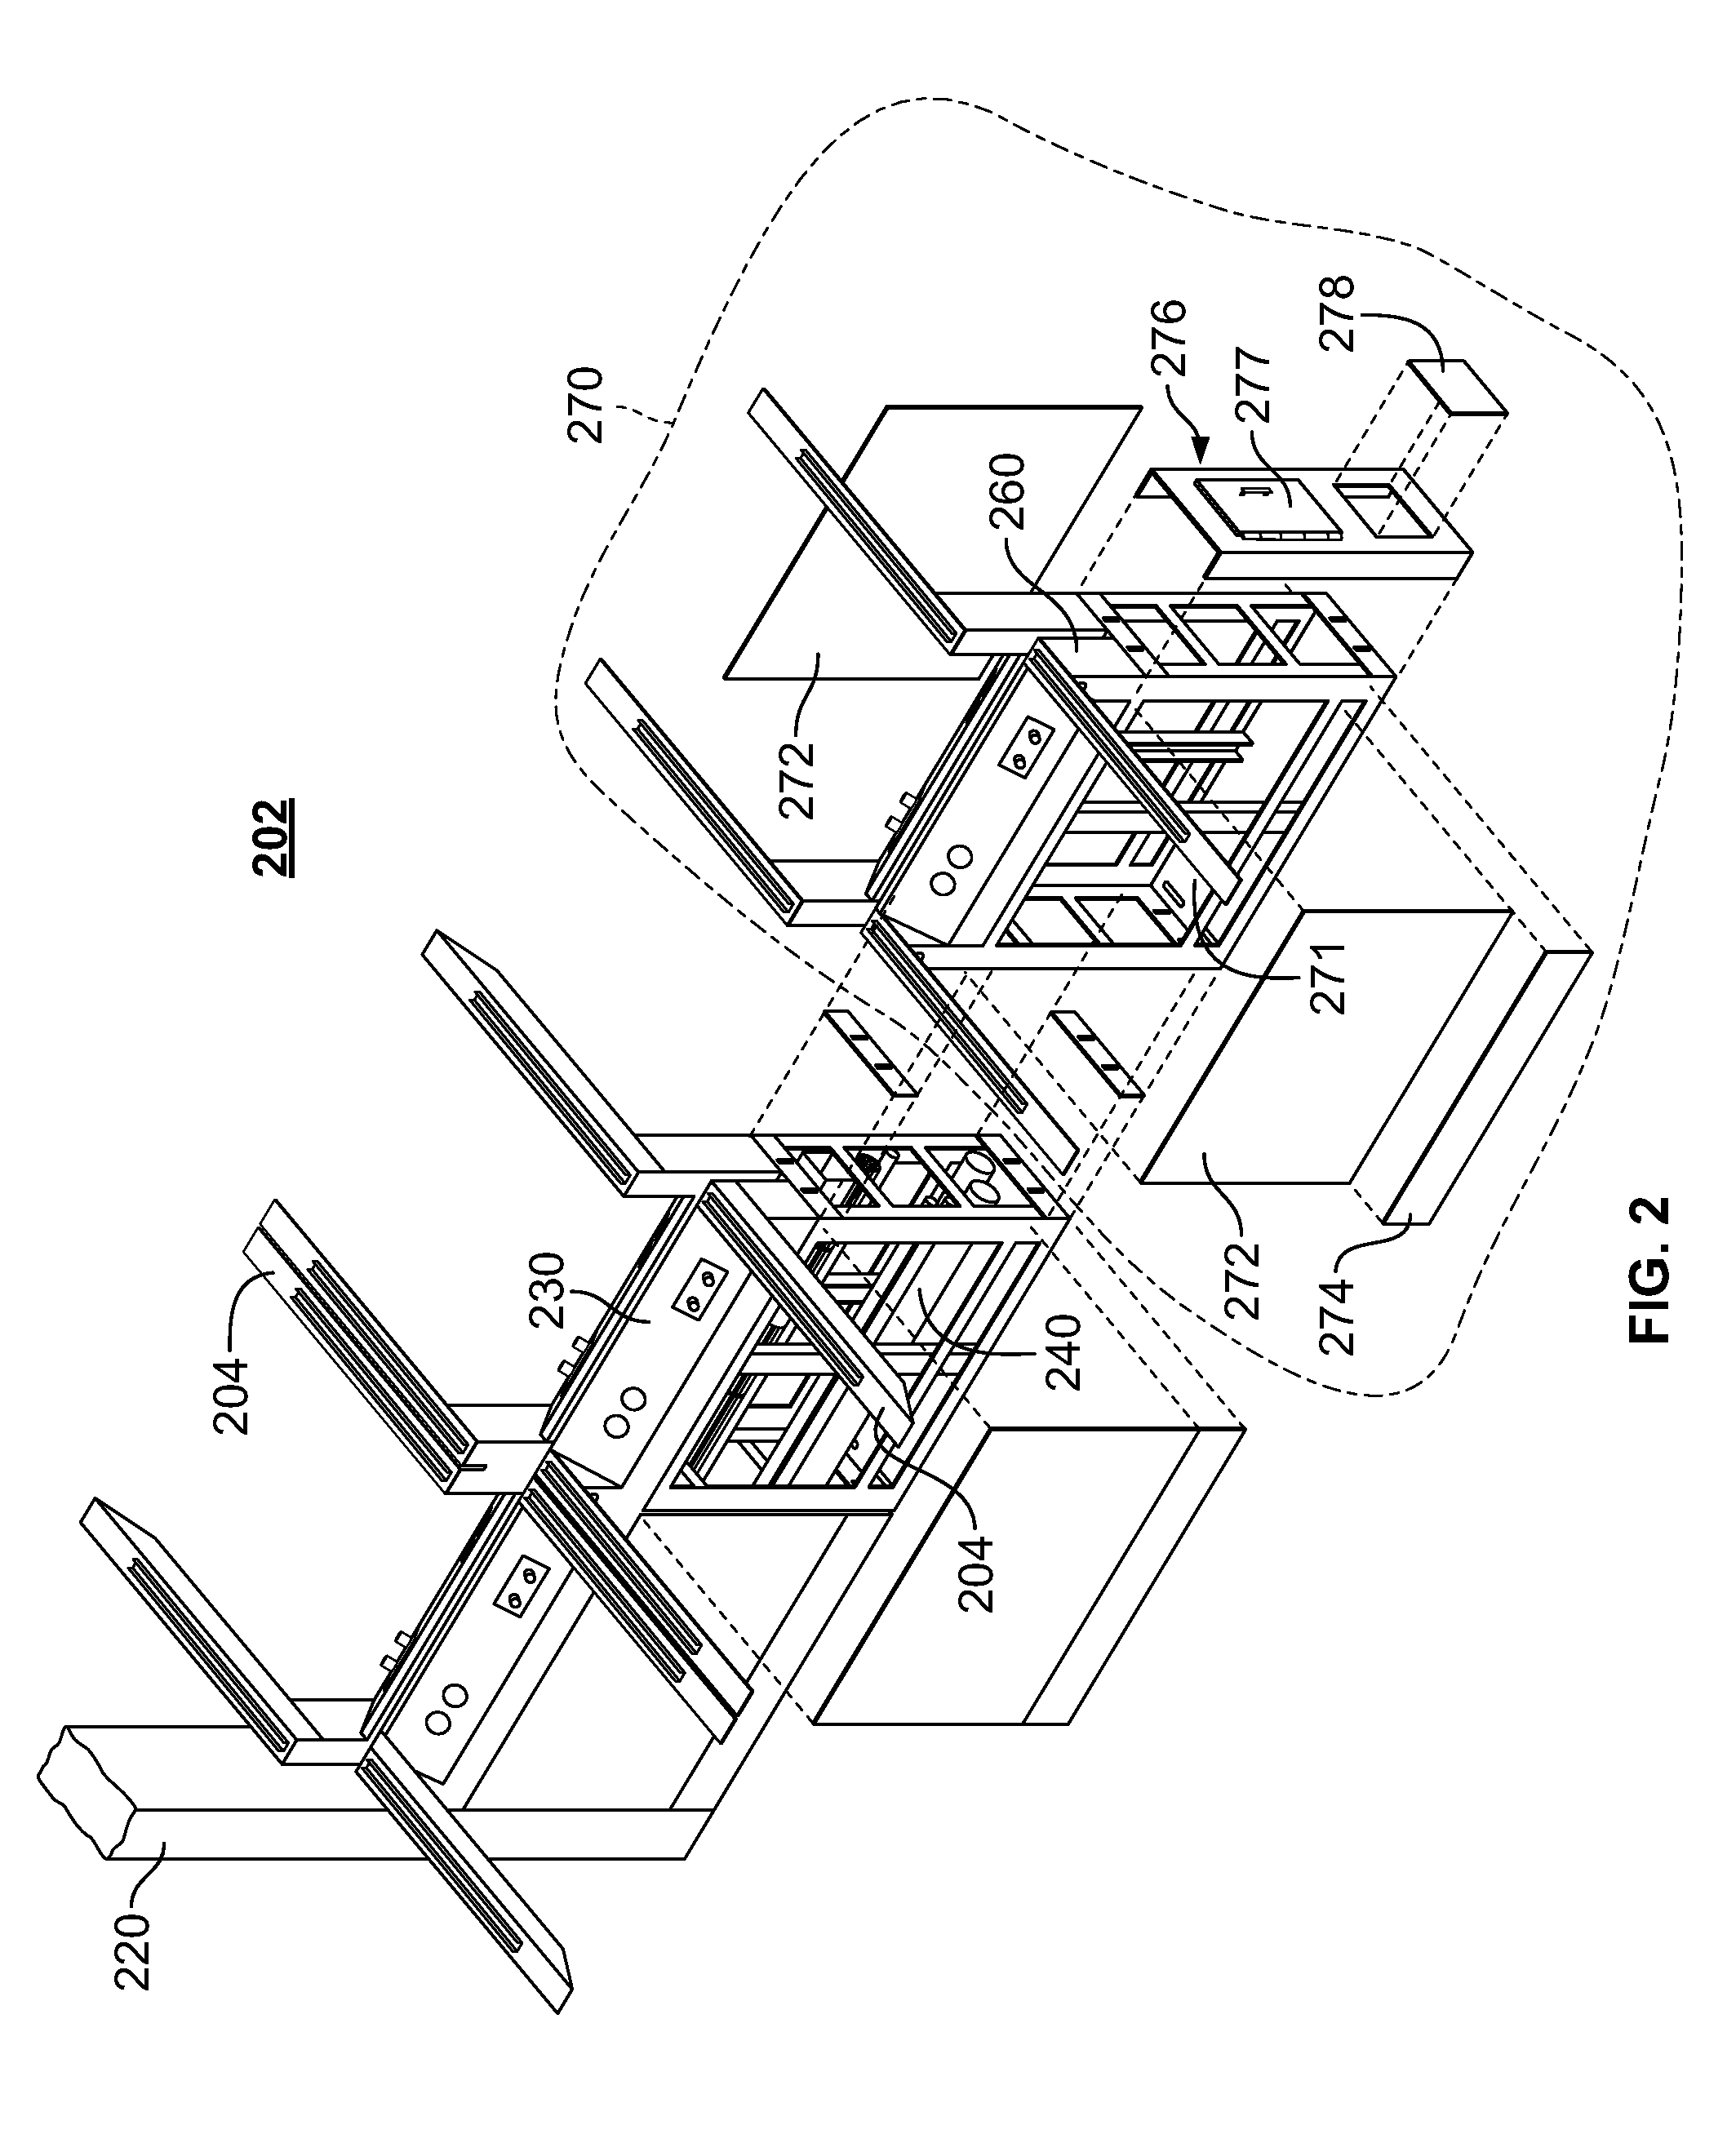 Modular laboratory workbench